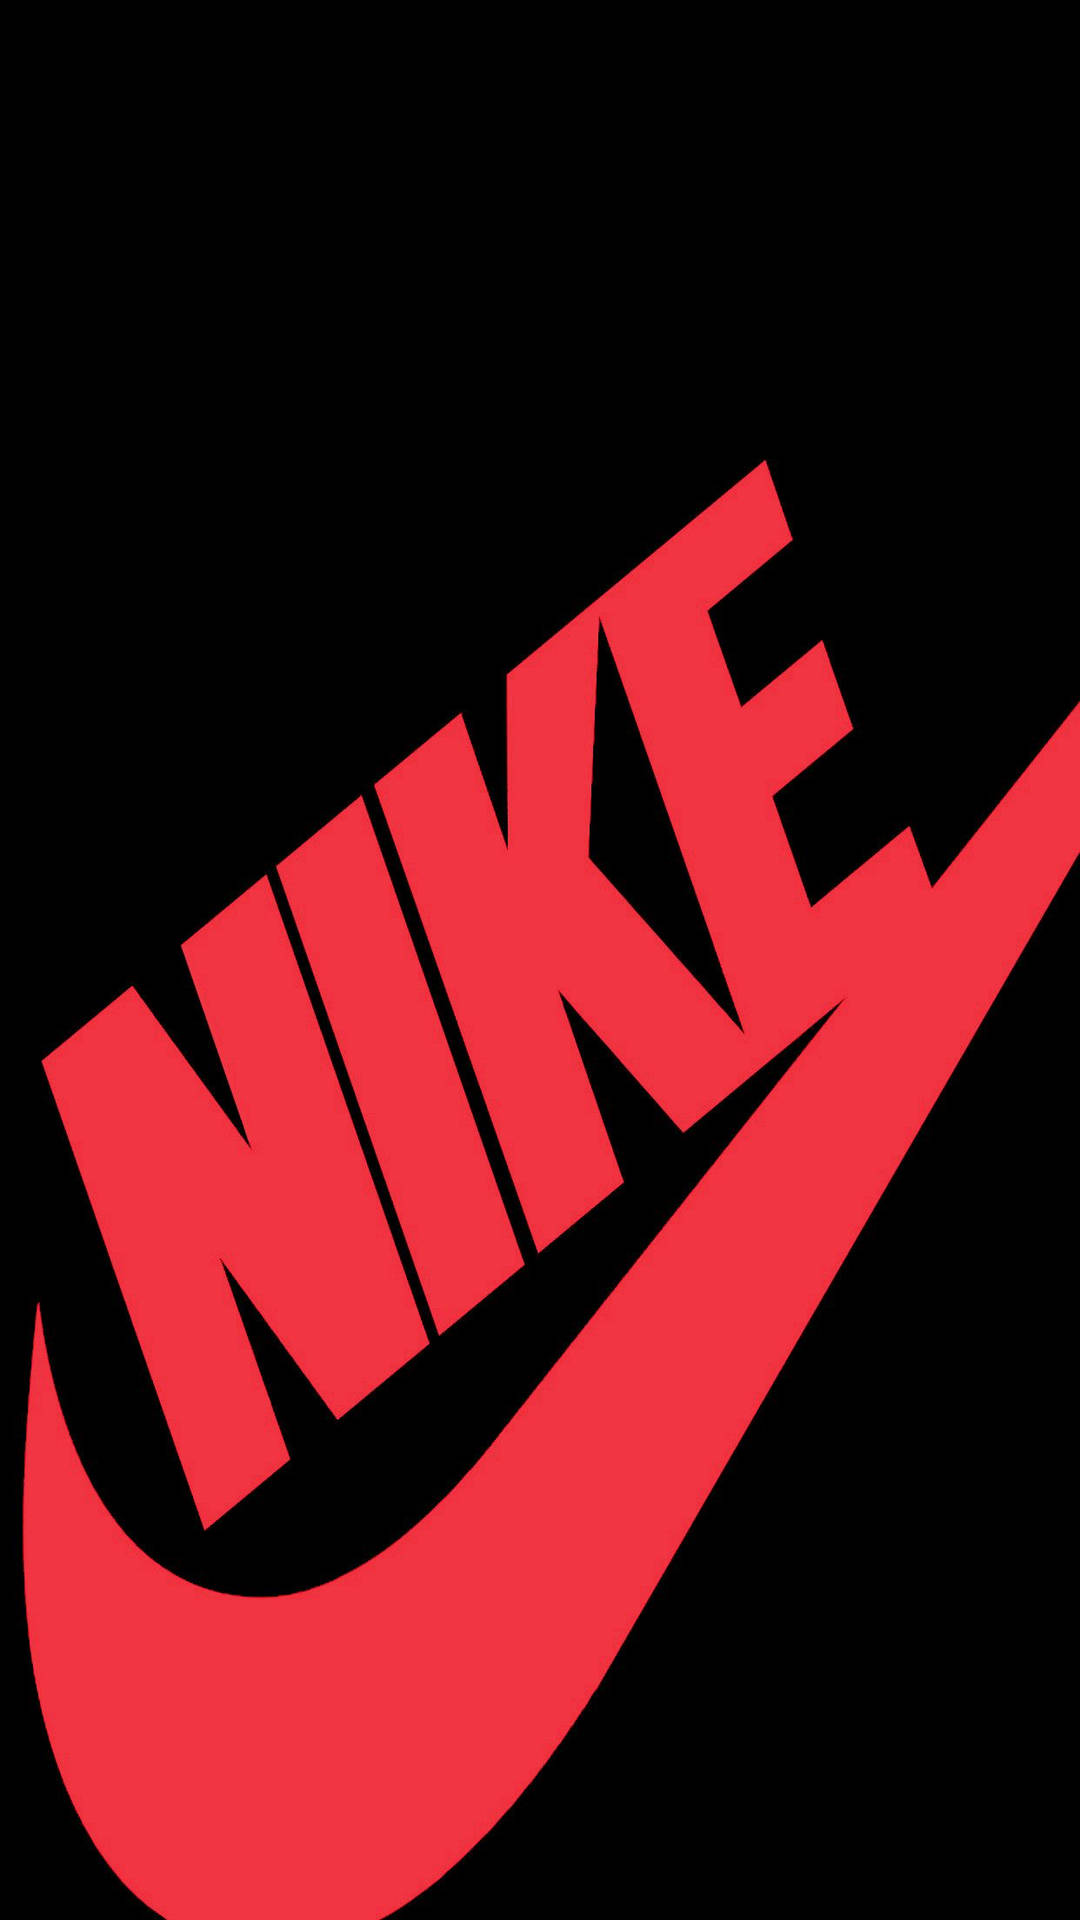 Iphone Nike Wallpaper Hd